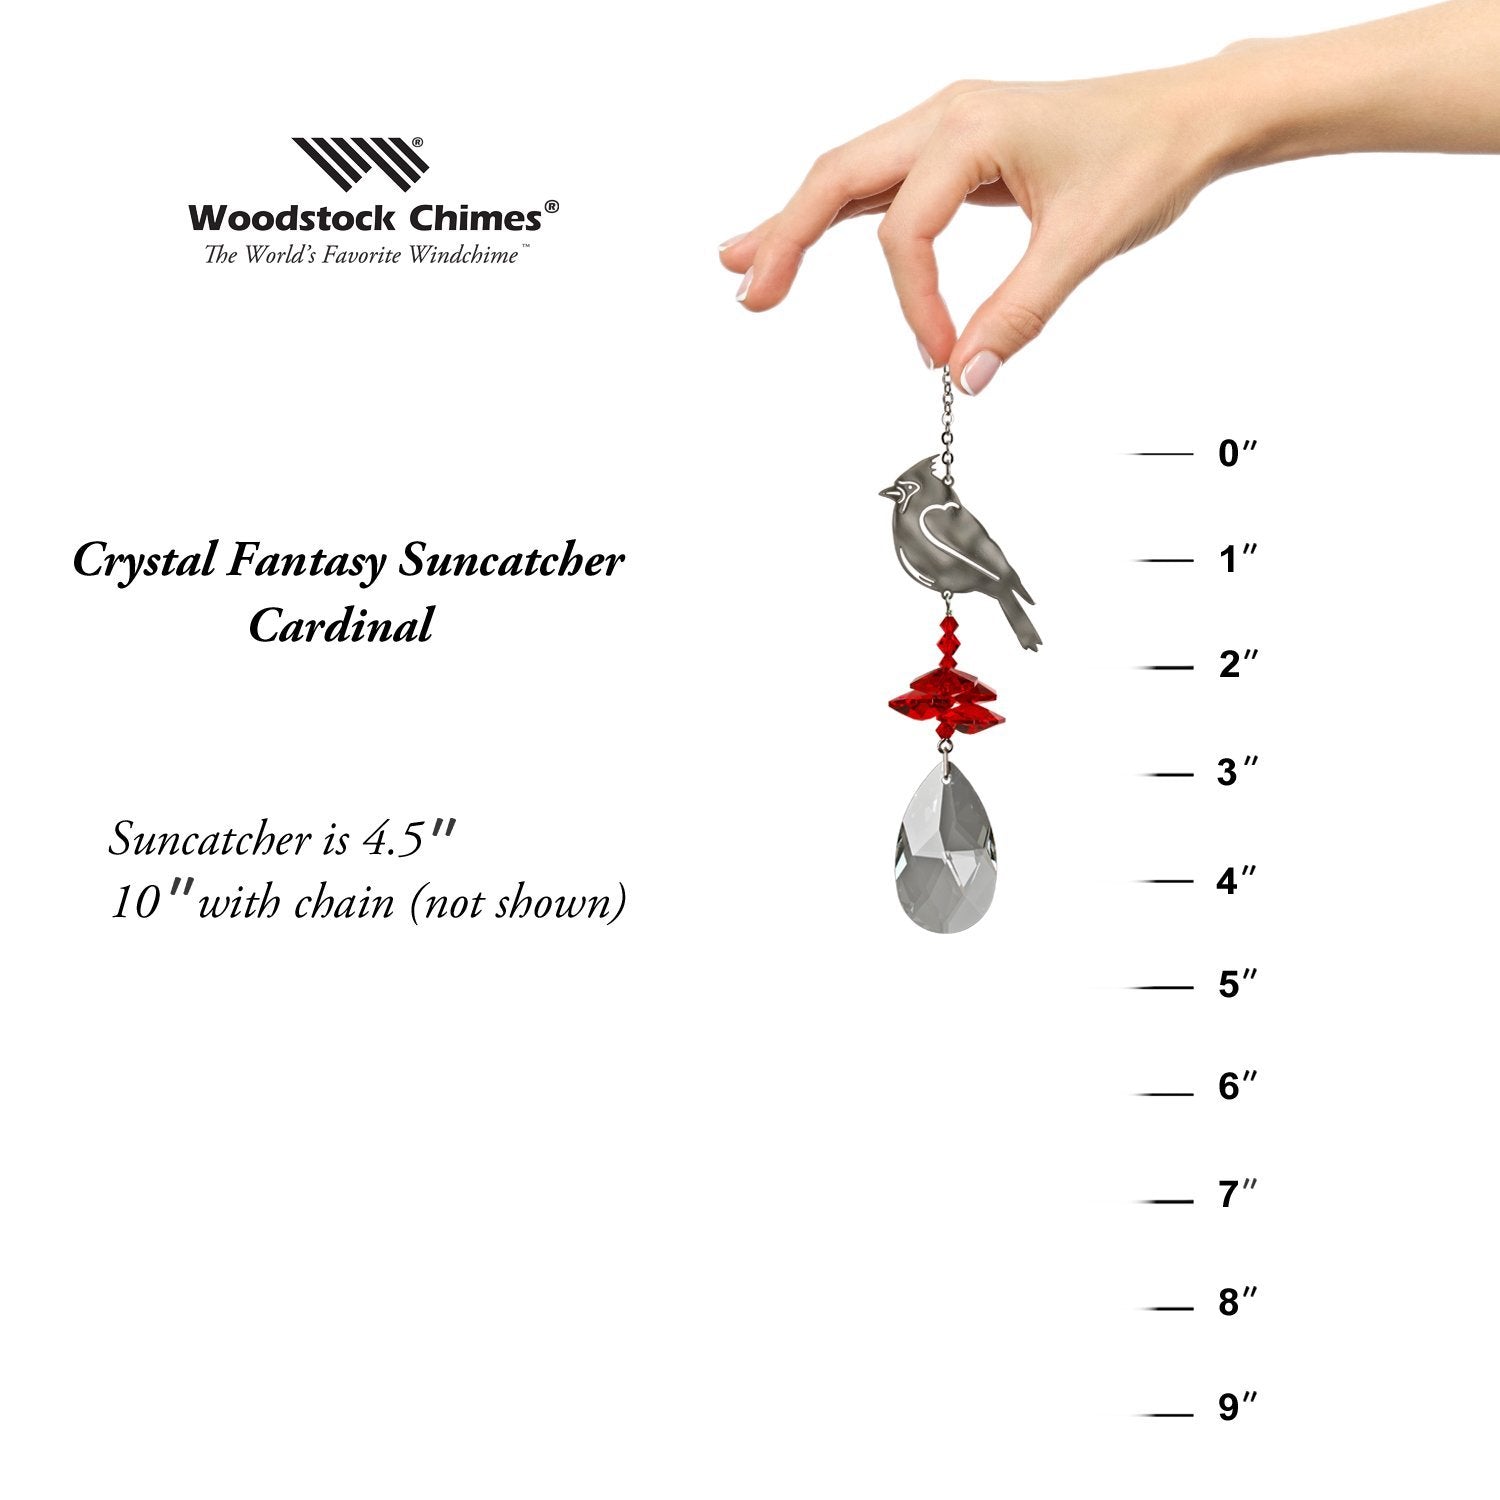 Crystal Fantasy Suncatcher - Cardinal proportion image